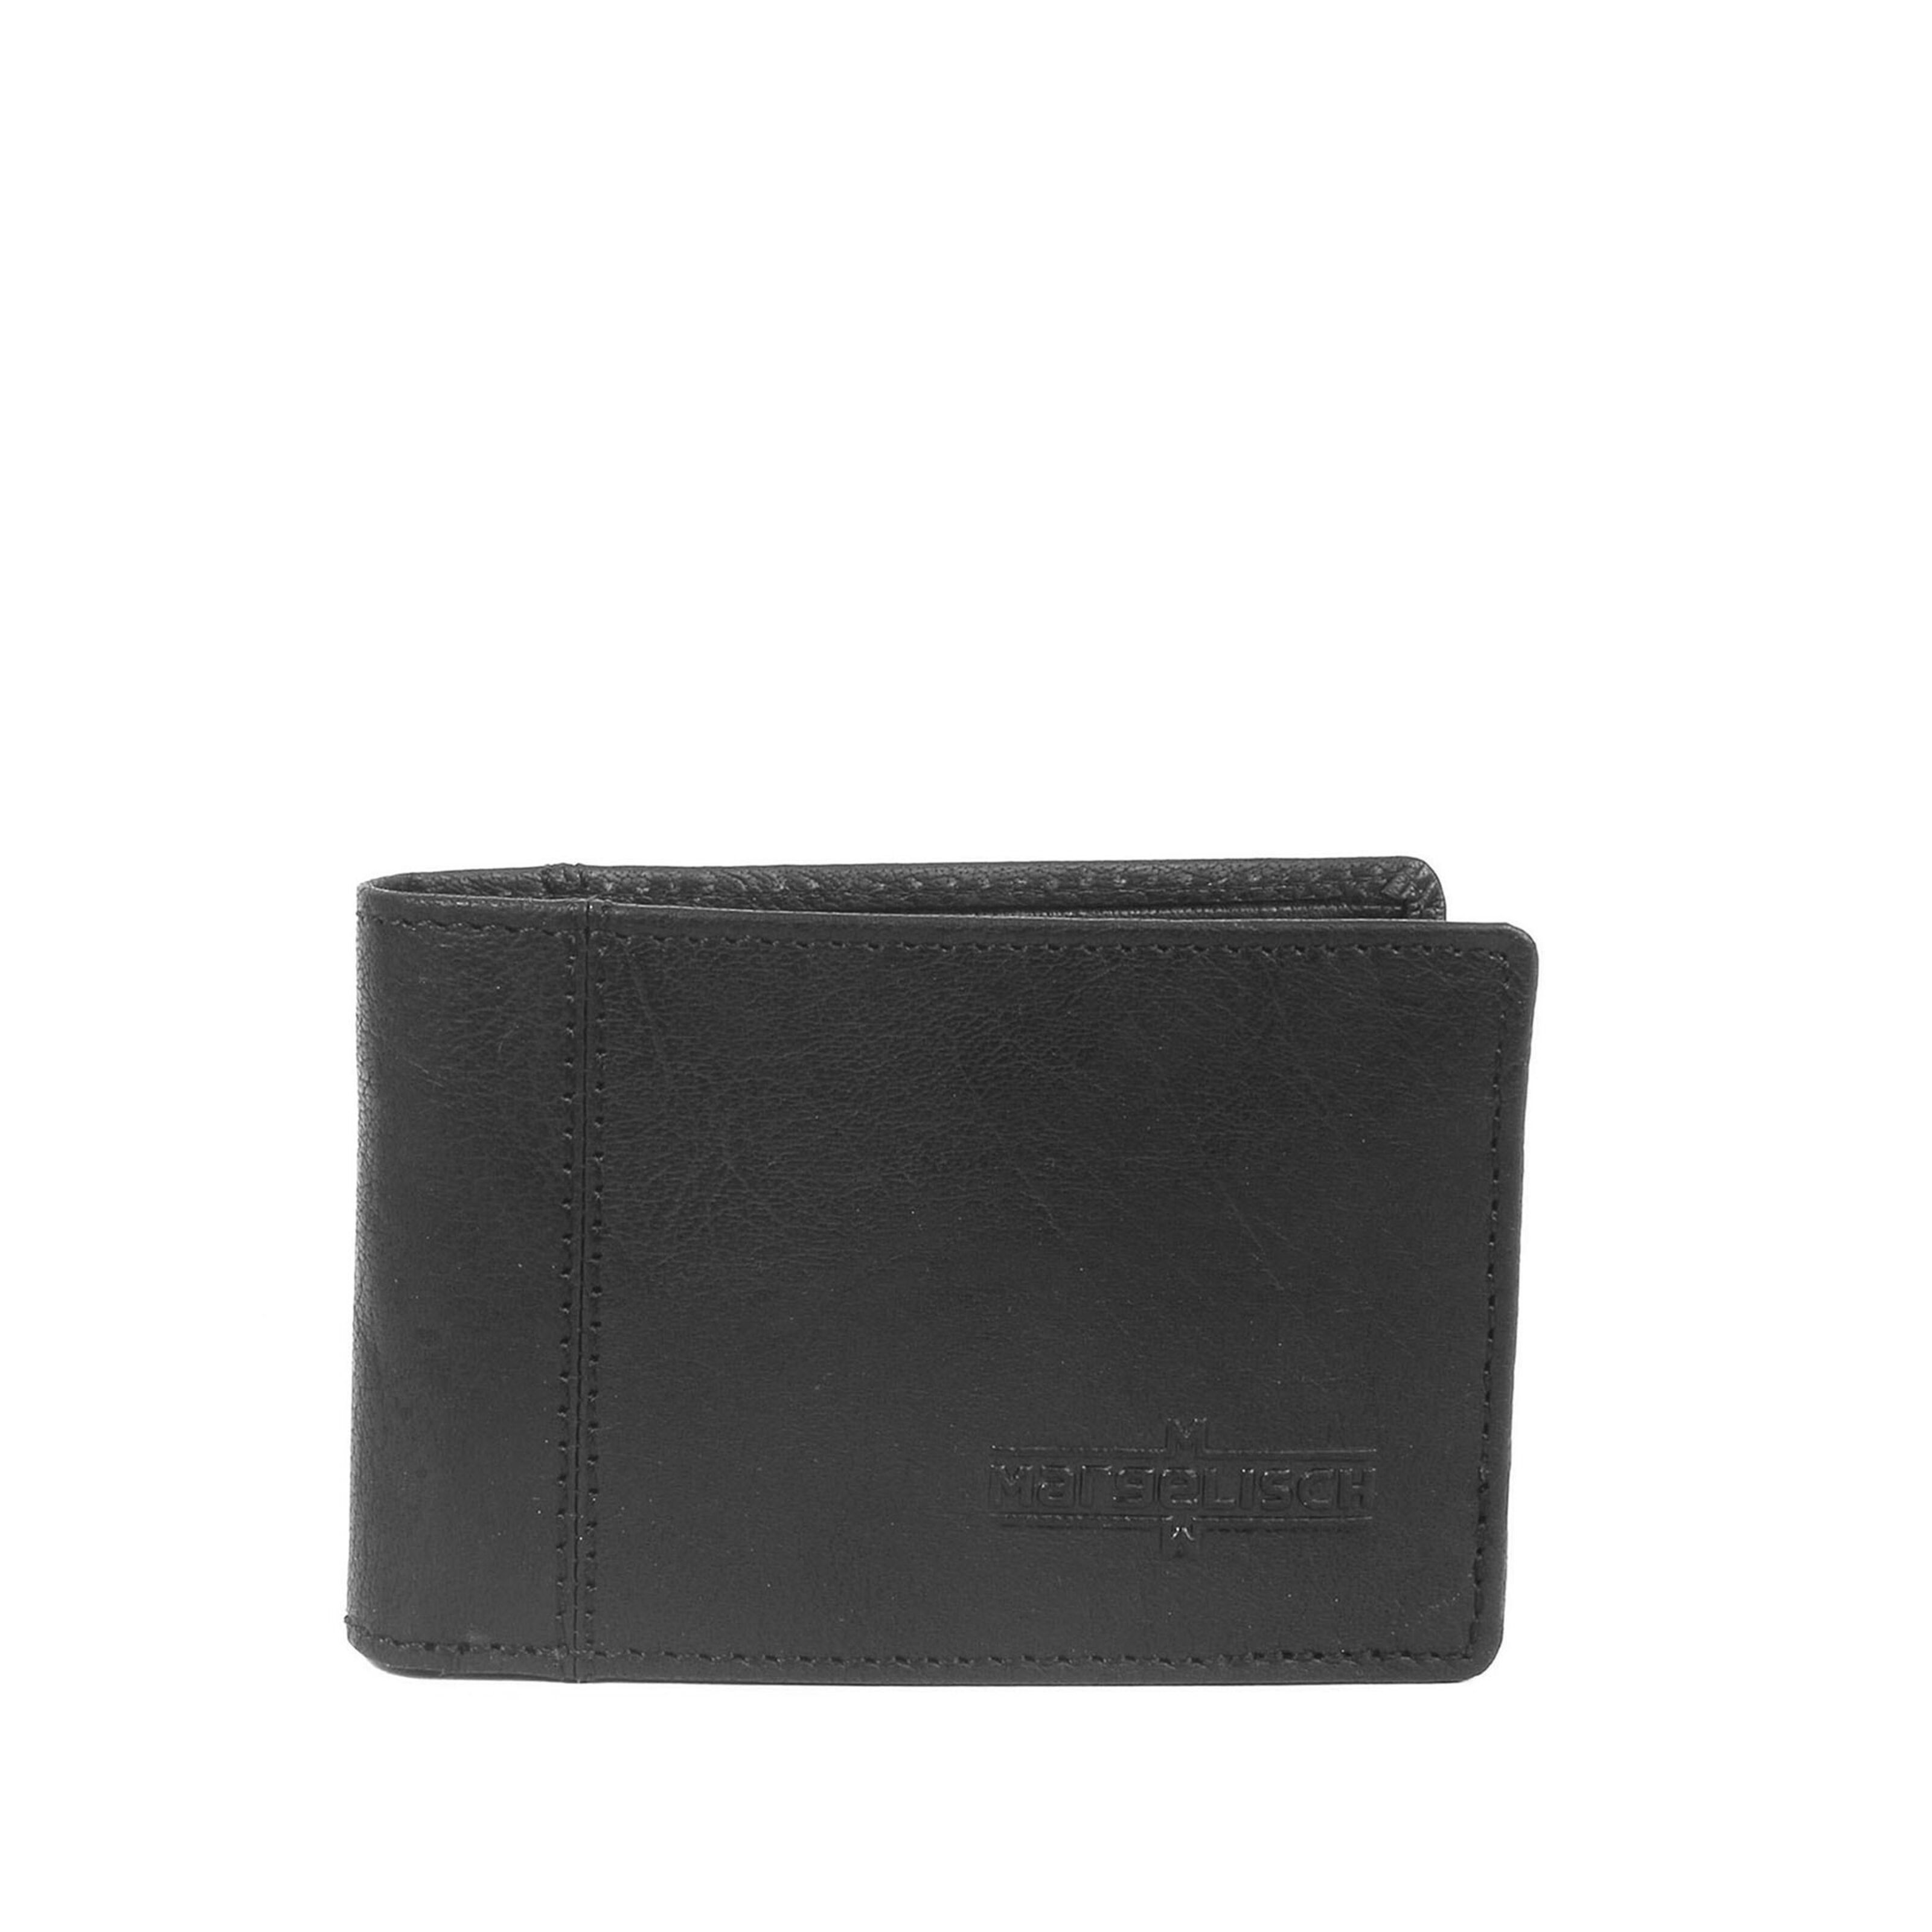 Buy wholesale RFID black mini 2 wallet Marcello